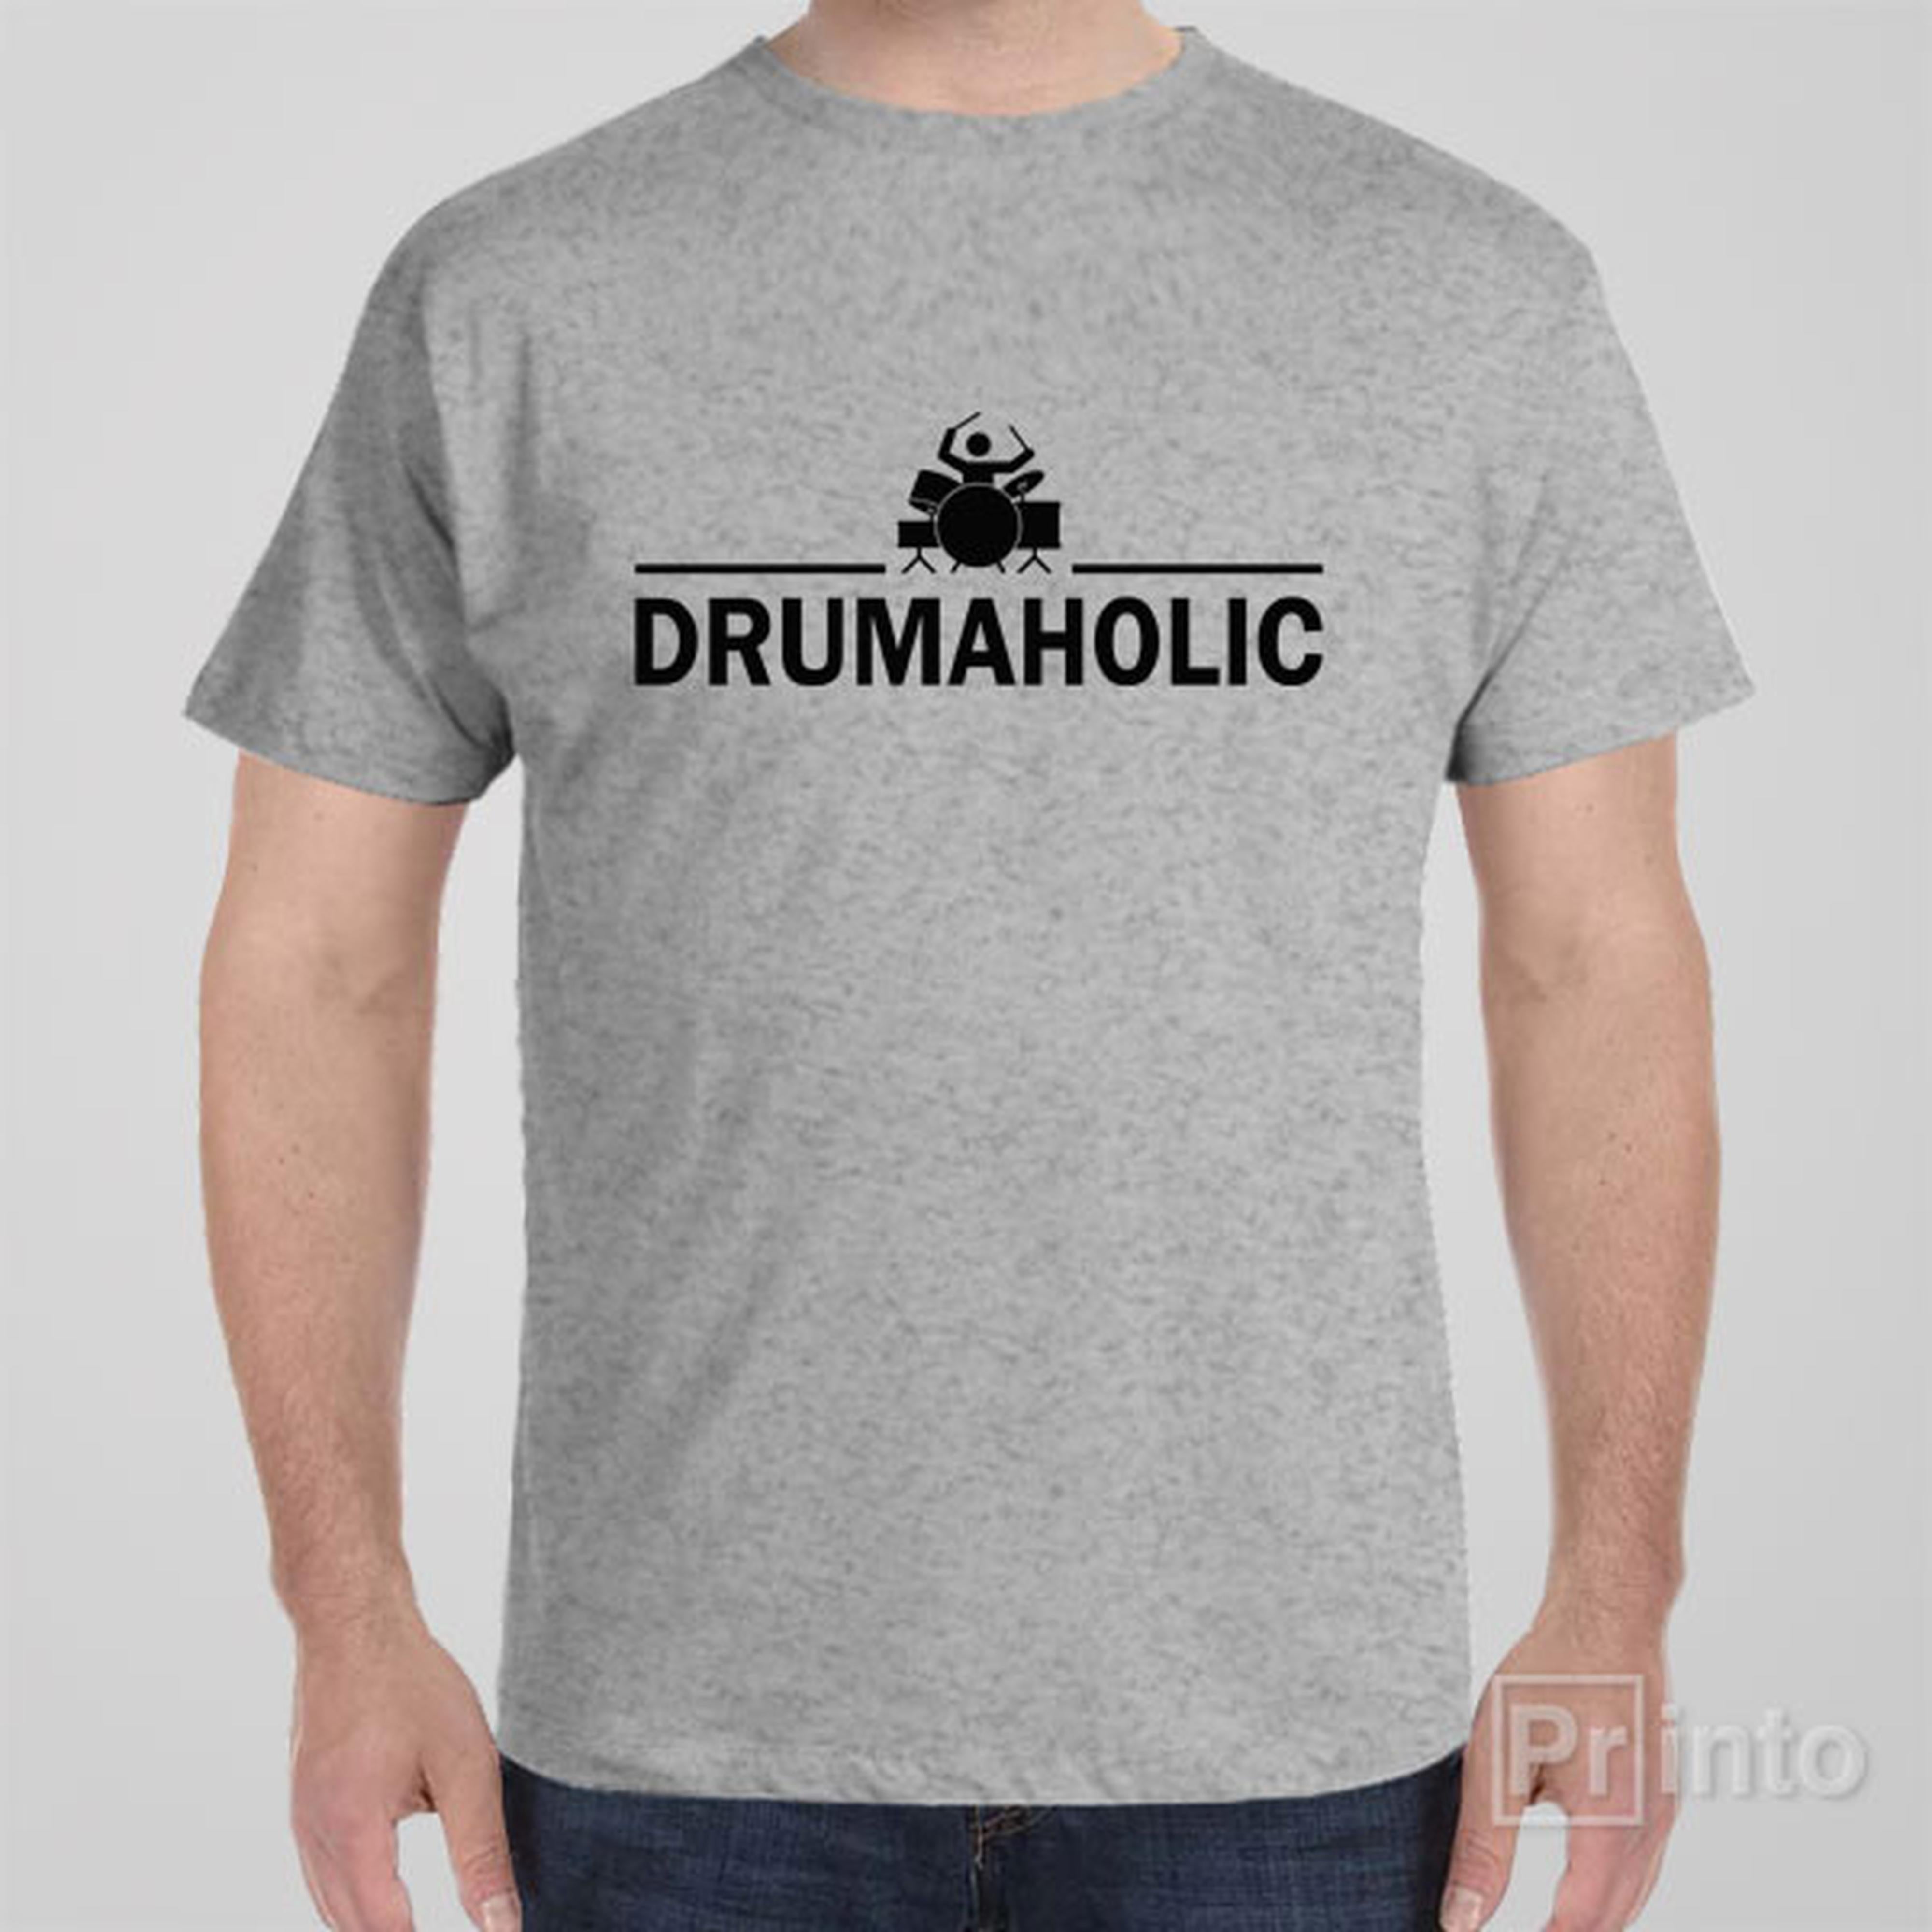 drumaholic-t-shirt